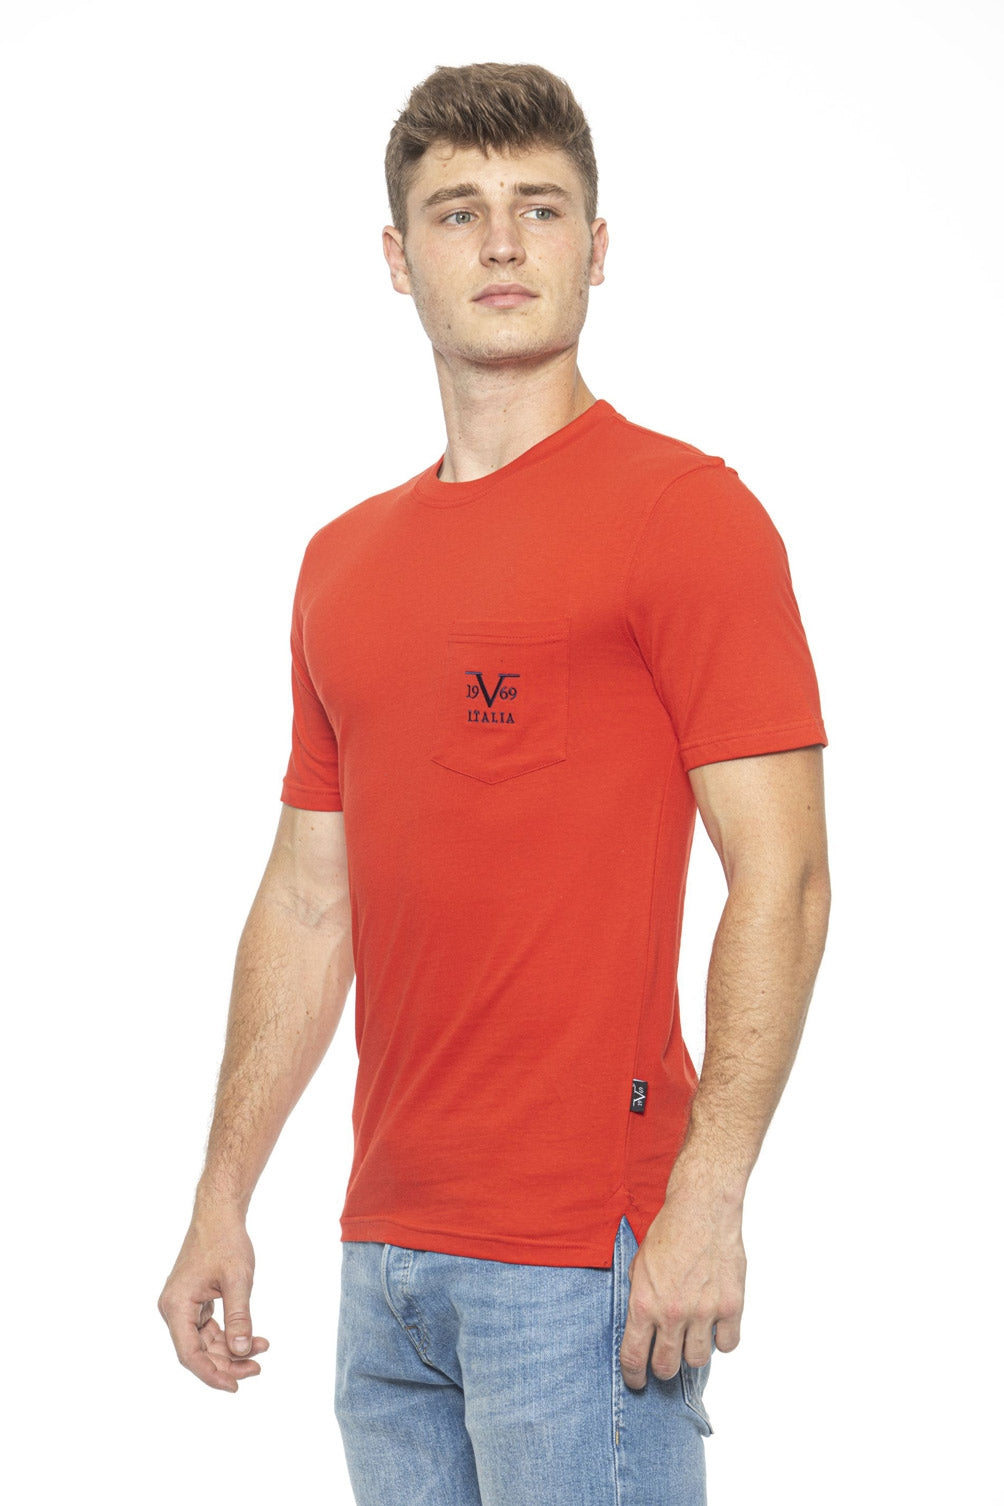 19V69 Italia Mens T-Shirt Red IVAN RED